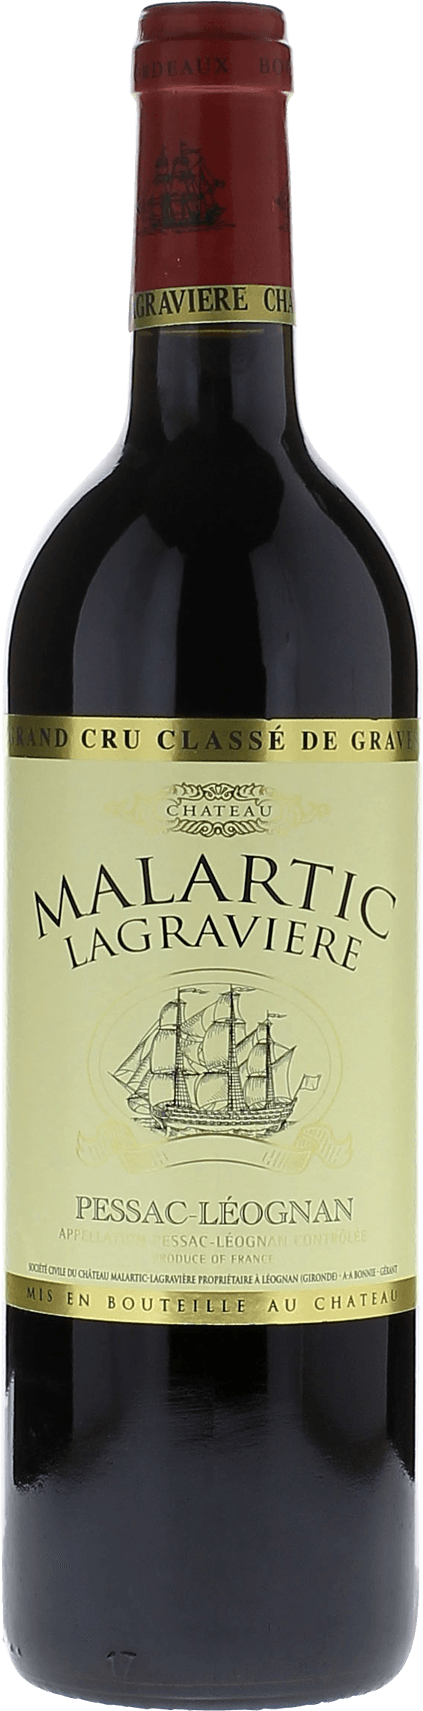 Malartic lagraviere rouge 2018 Grand Cru Class Graves, Bordeaux rouge